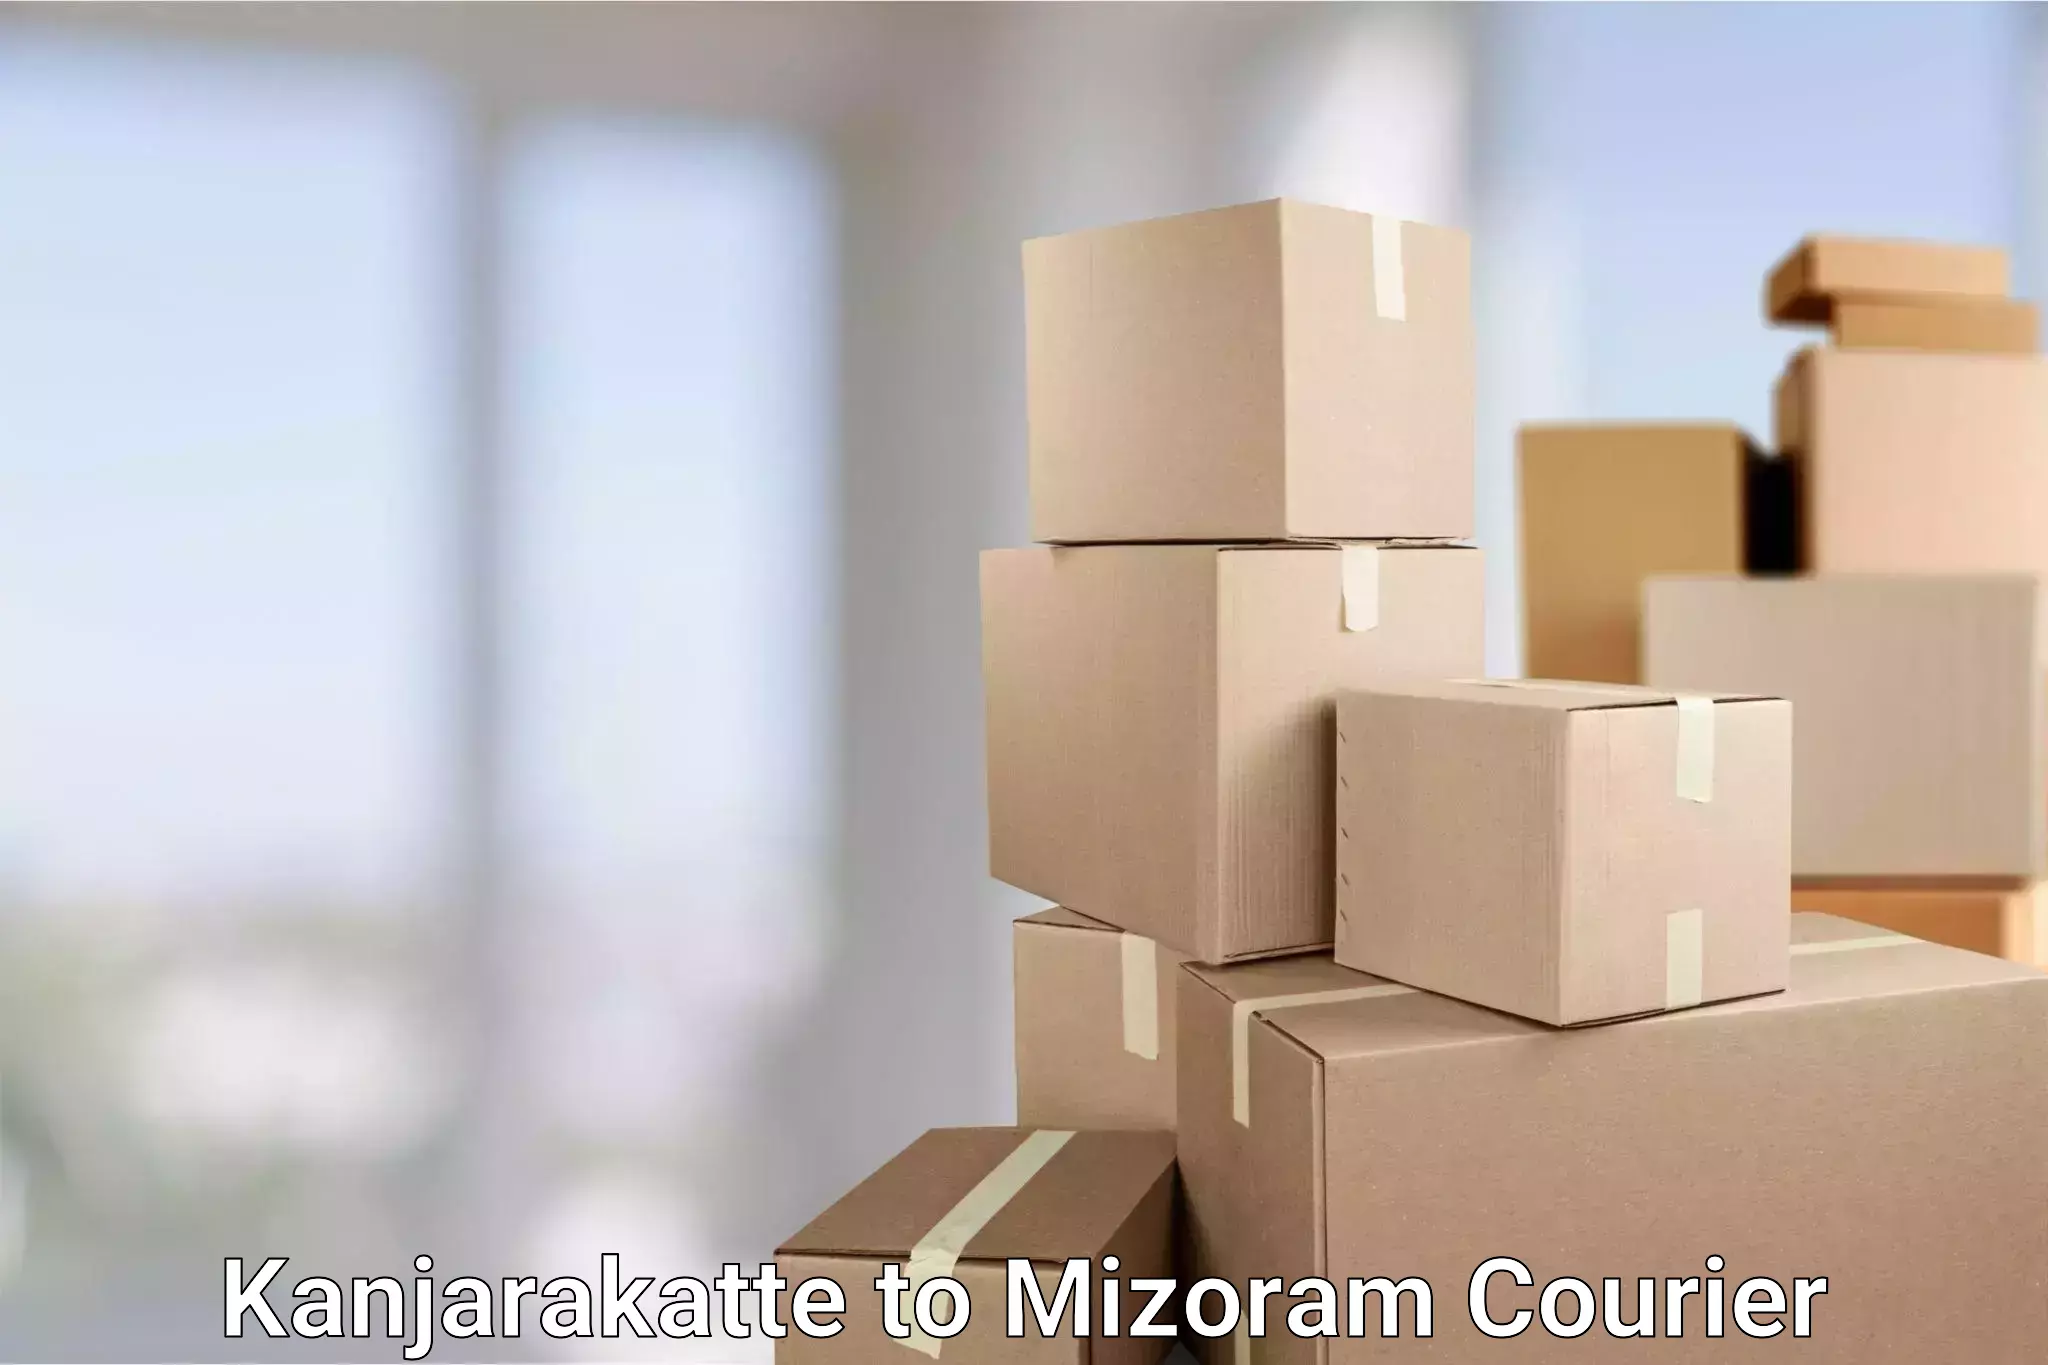 Quality courier services Kanjarakatte to Mizoram